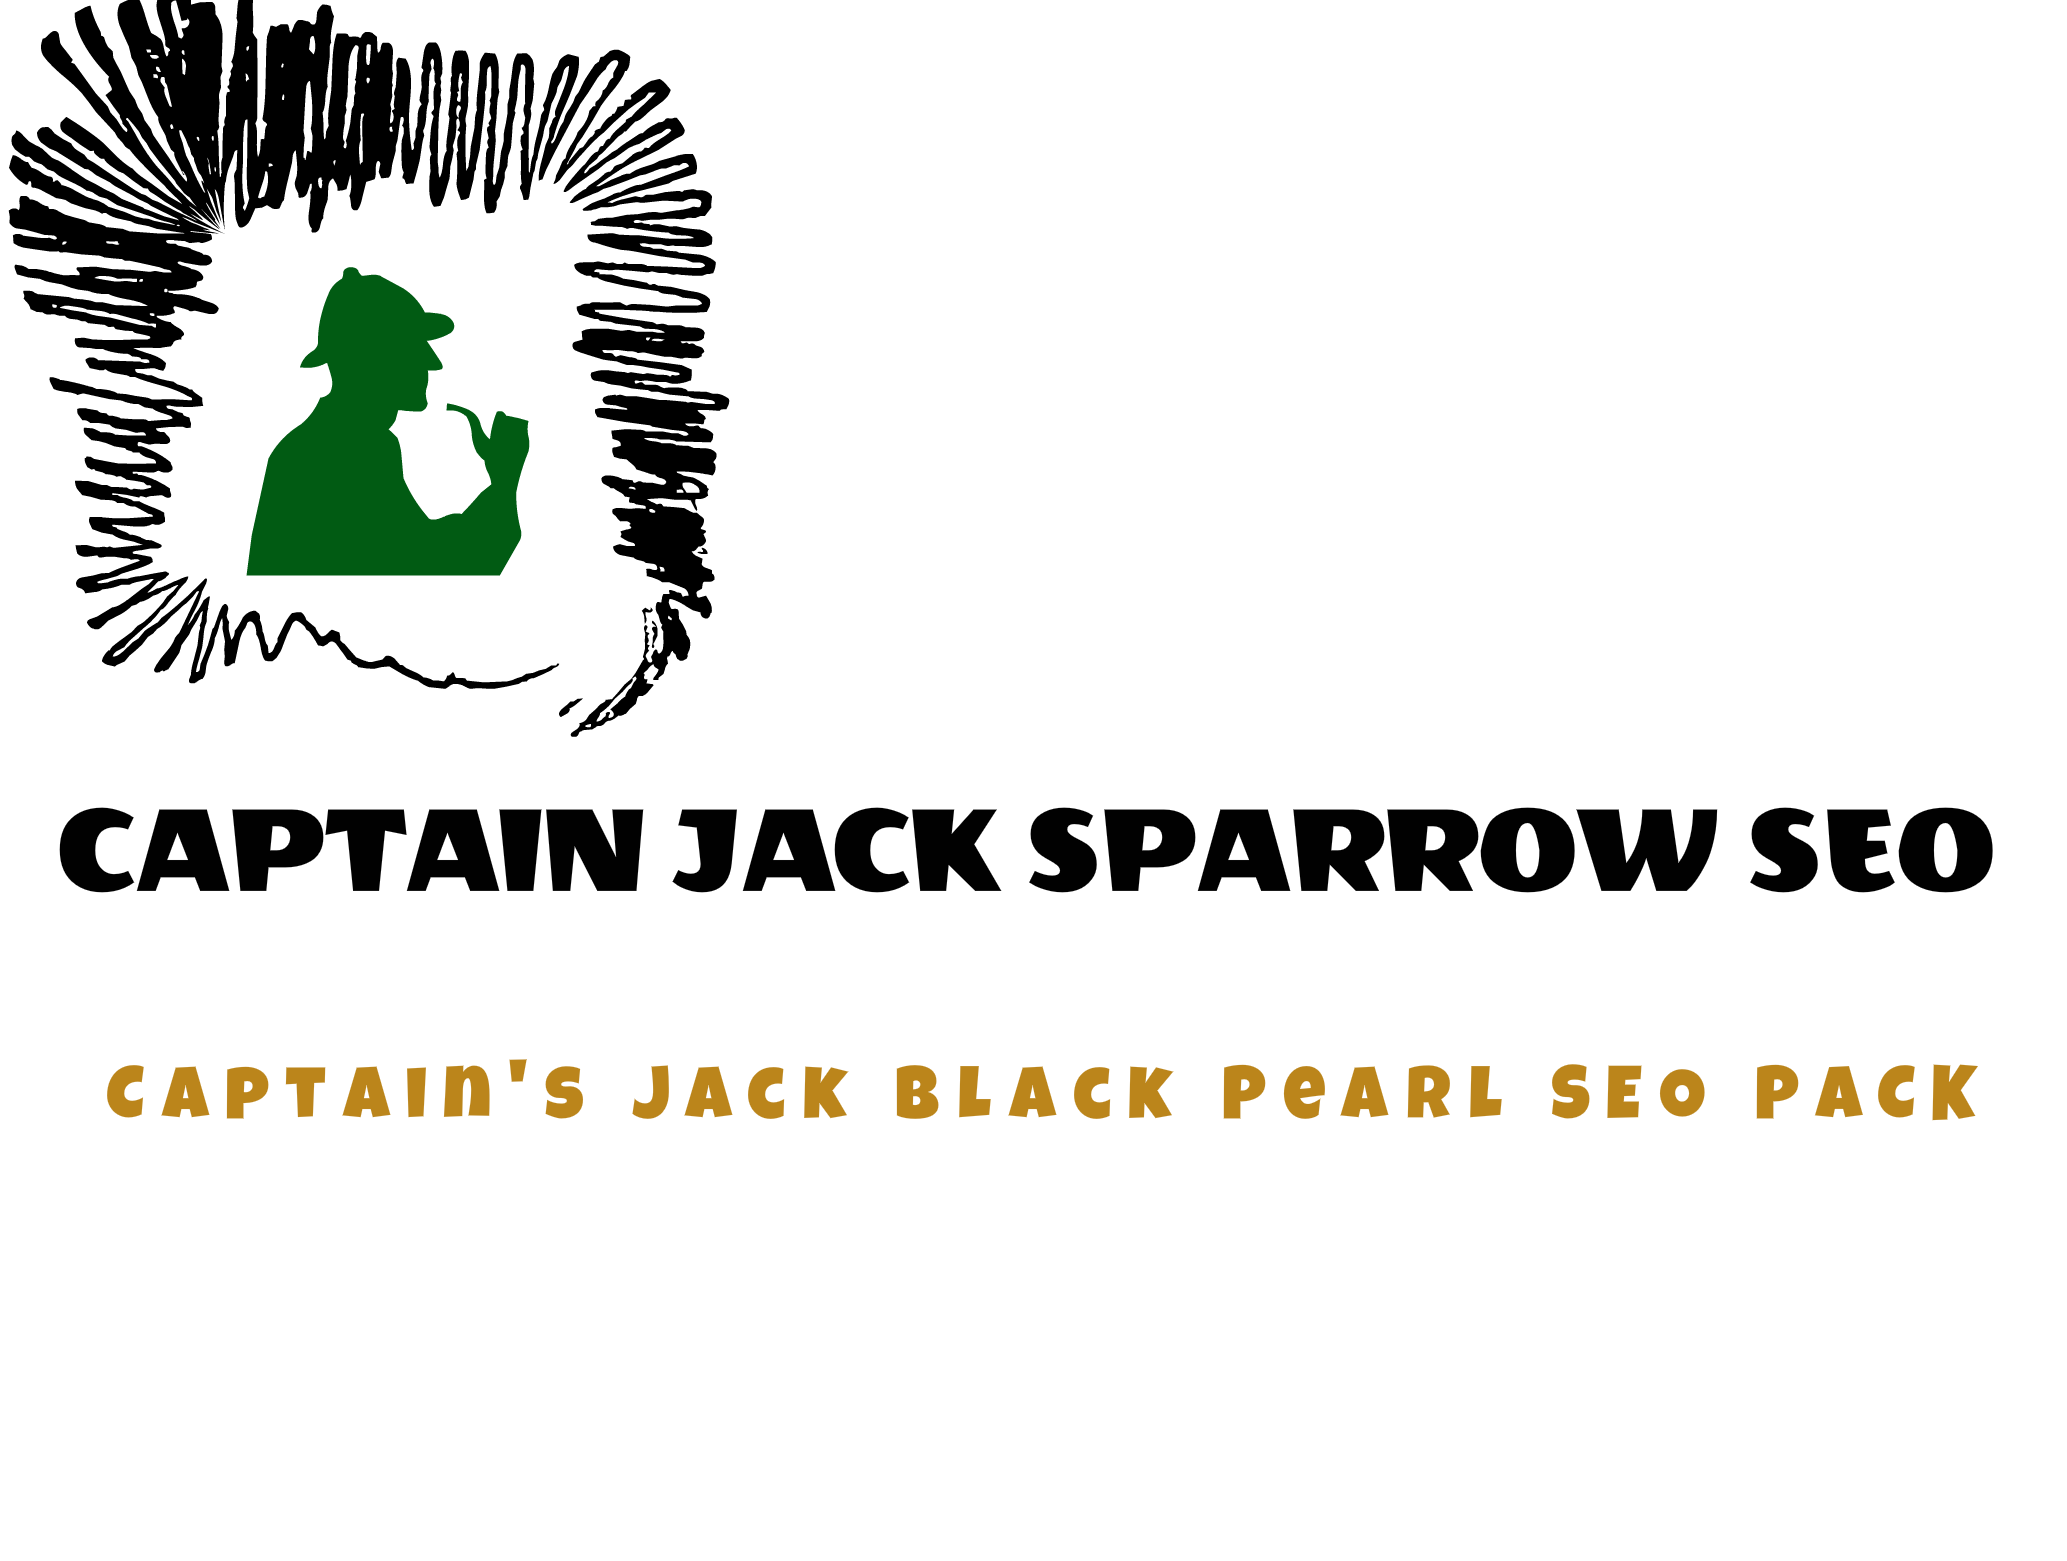 CAPTAINS JACK BLACK PEARL SEO PACK